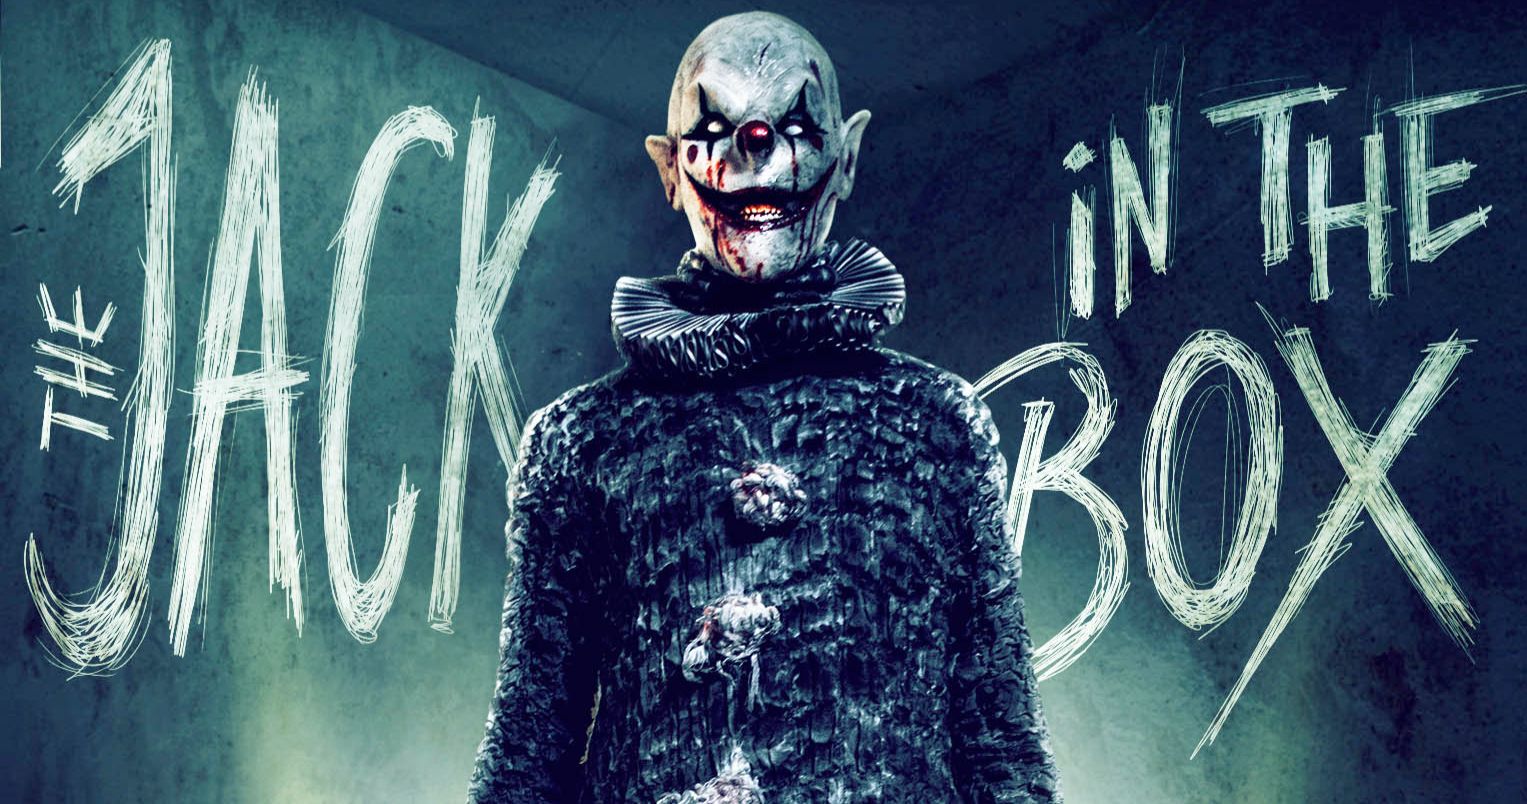 The Jack in the Box Trailer Unlocks a Creepy Clown Demon